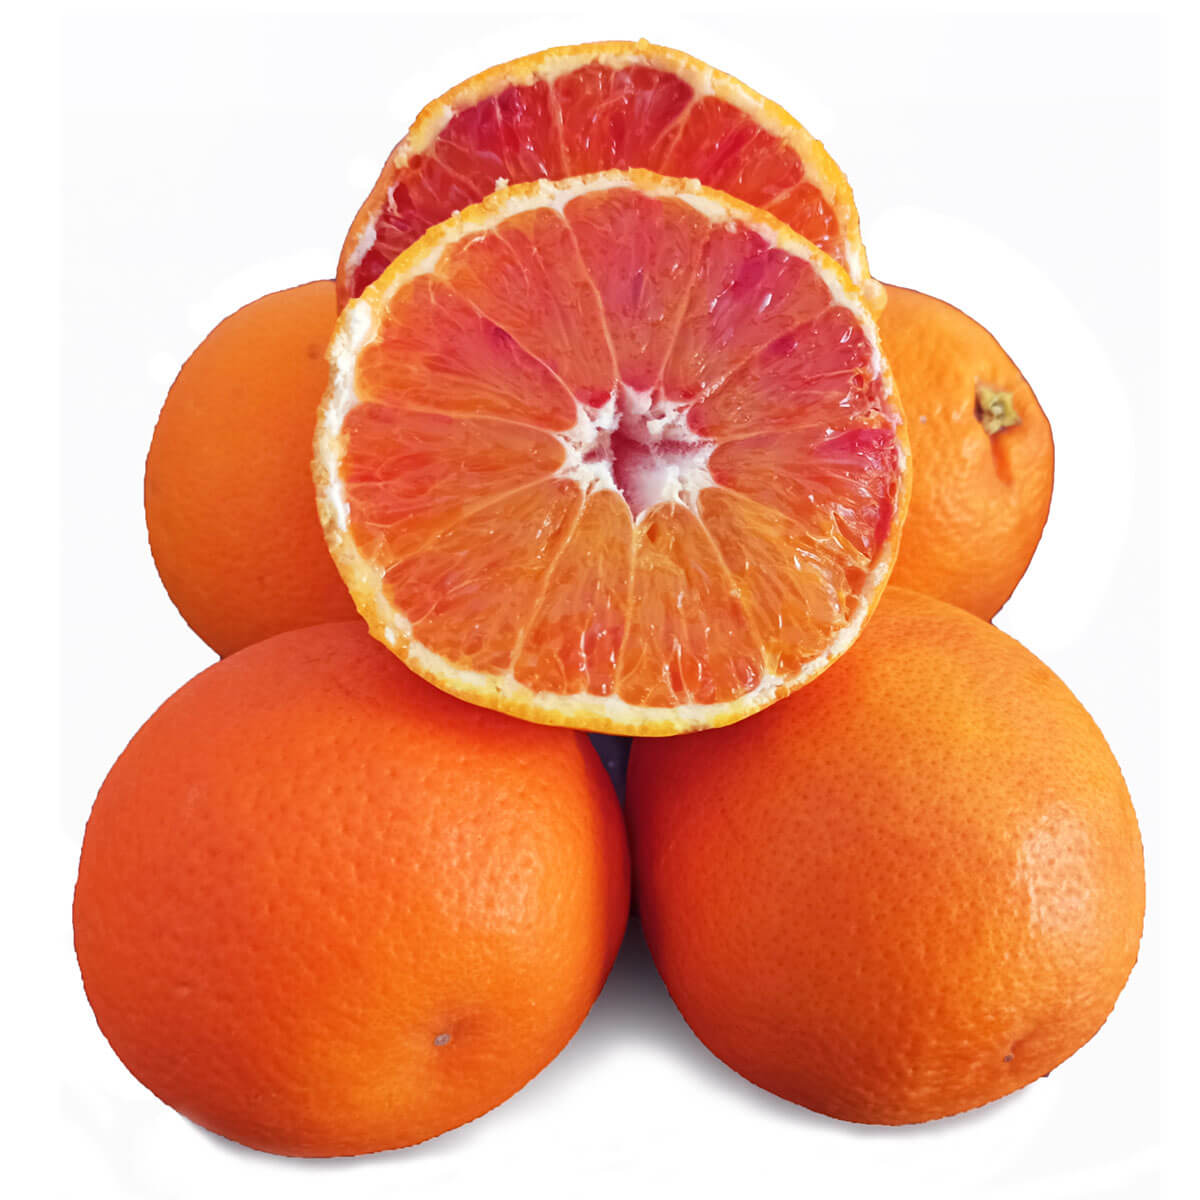 Organic tarocco blood oranges